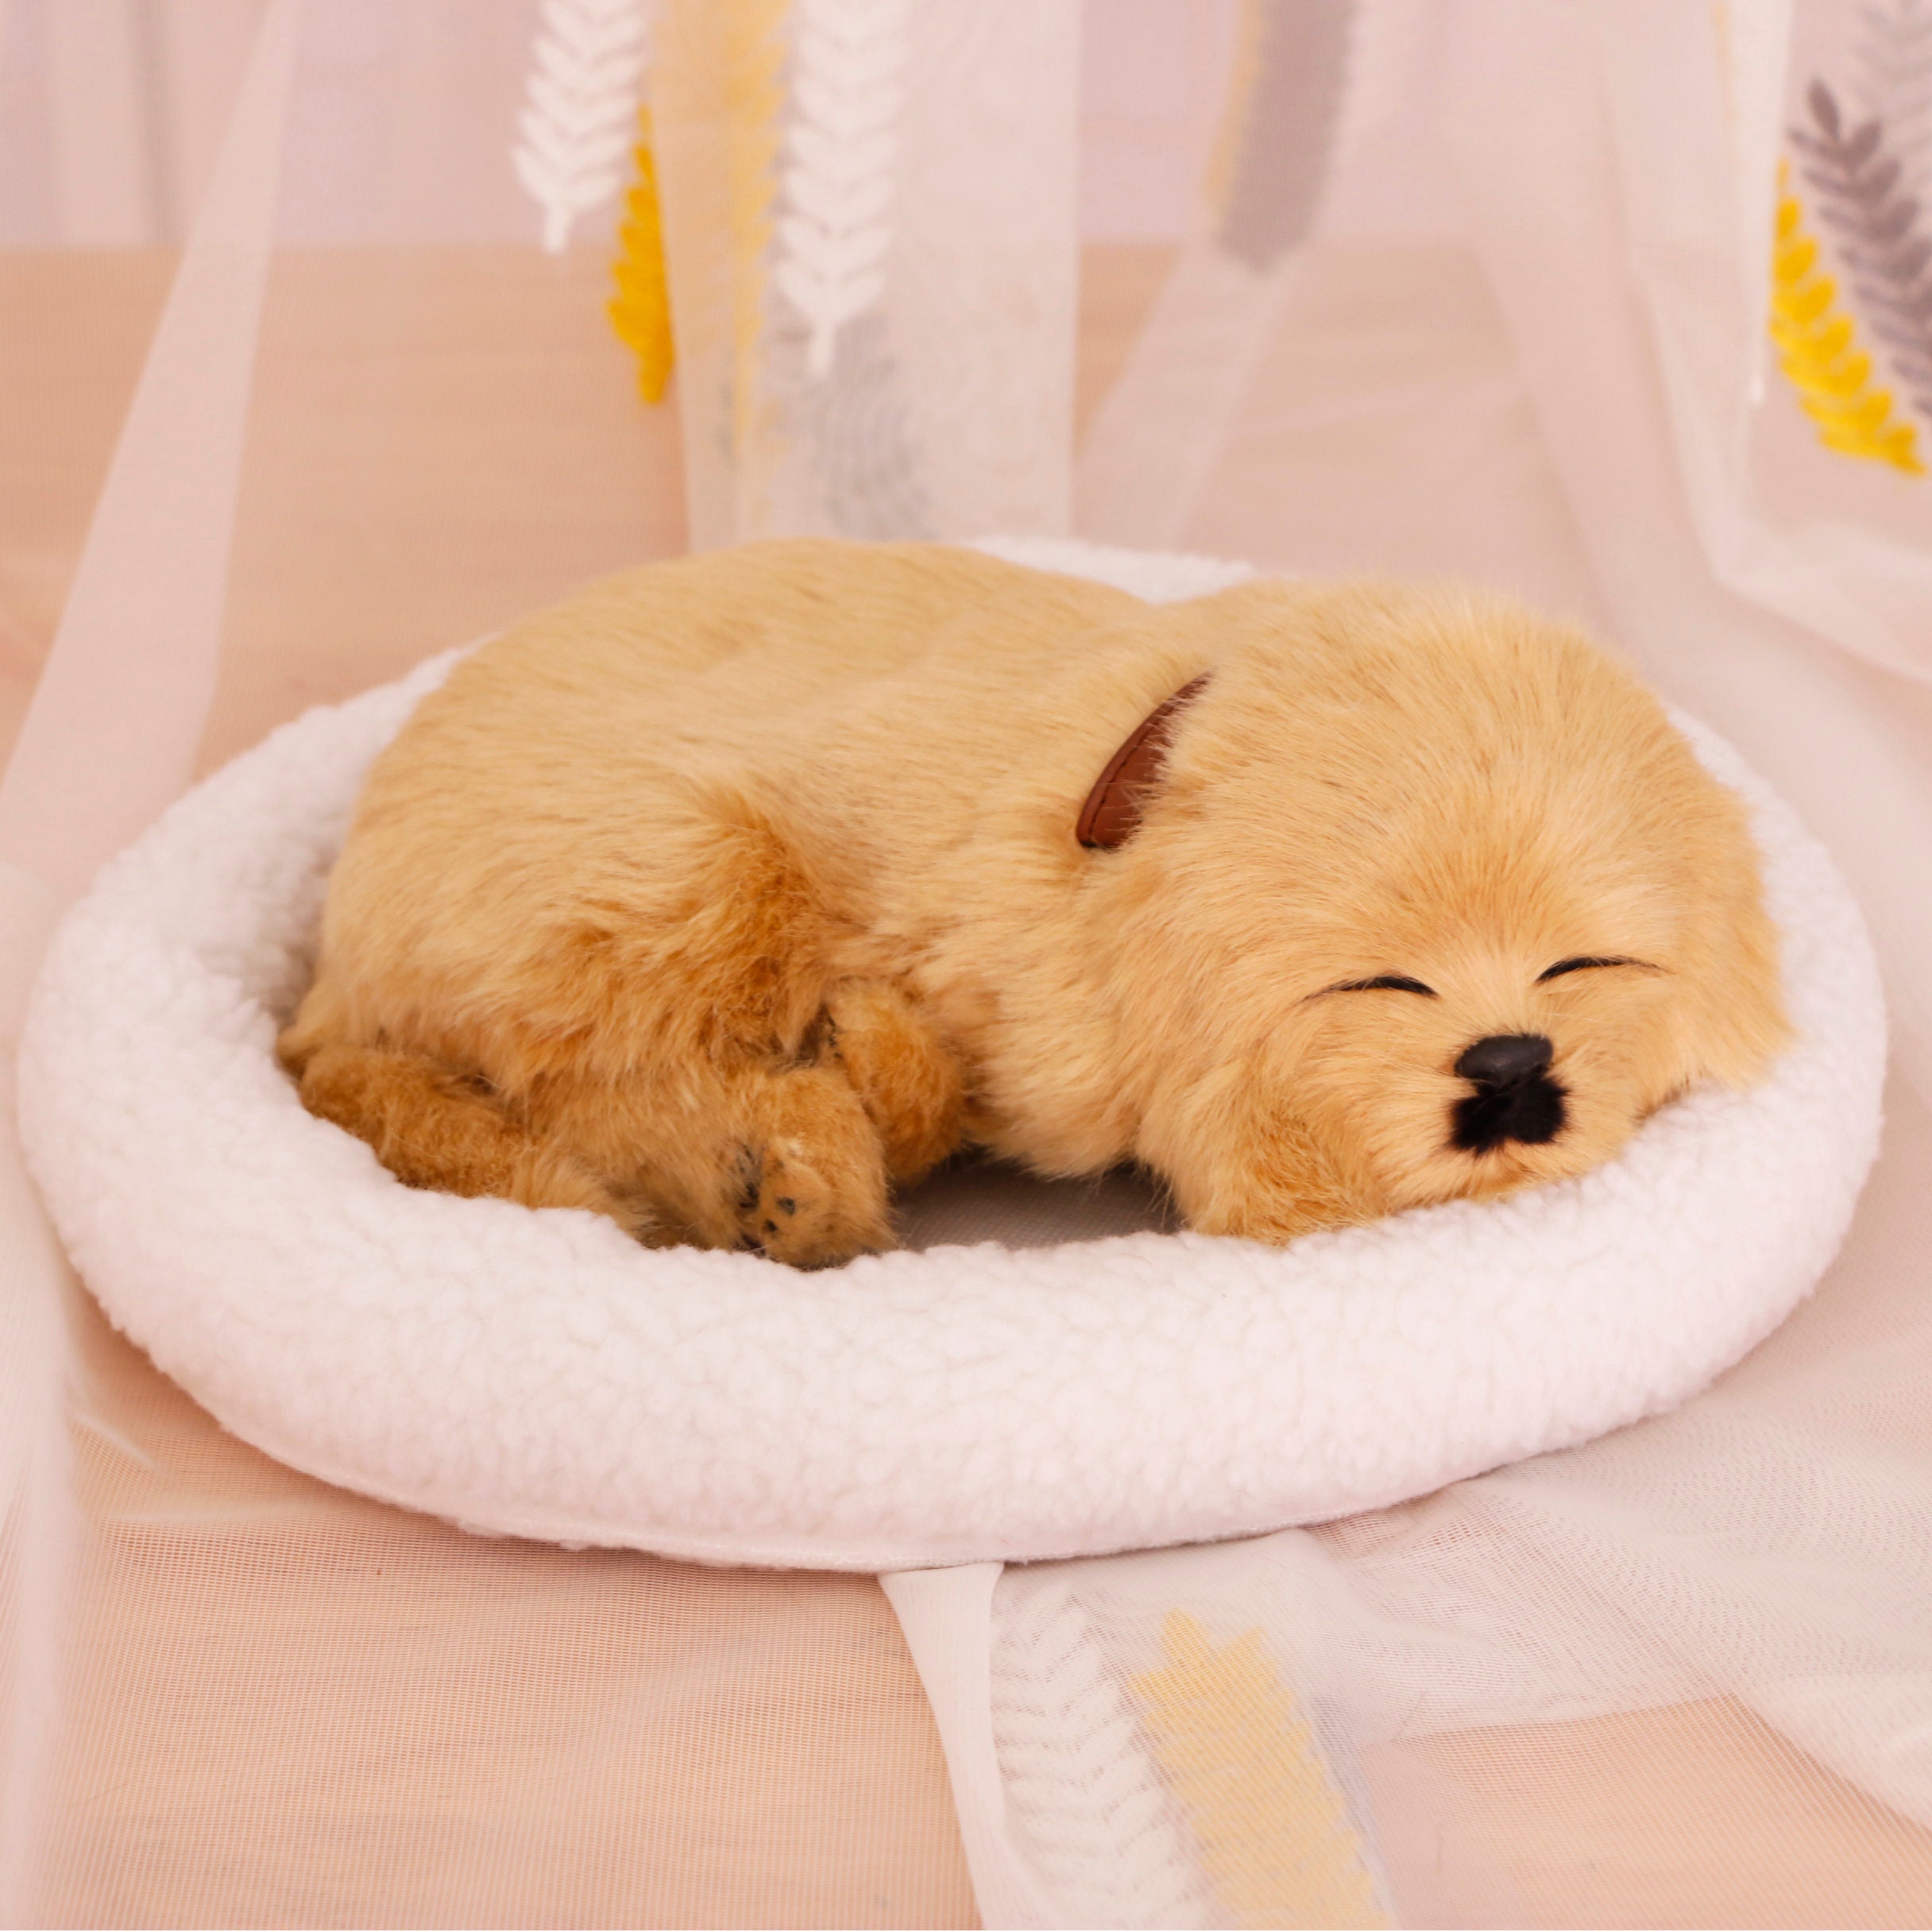 Cute Breathing/Sleeping Stuffed Pet Plush Toys Kids Pet Gift Home Decor Ornament 